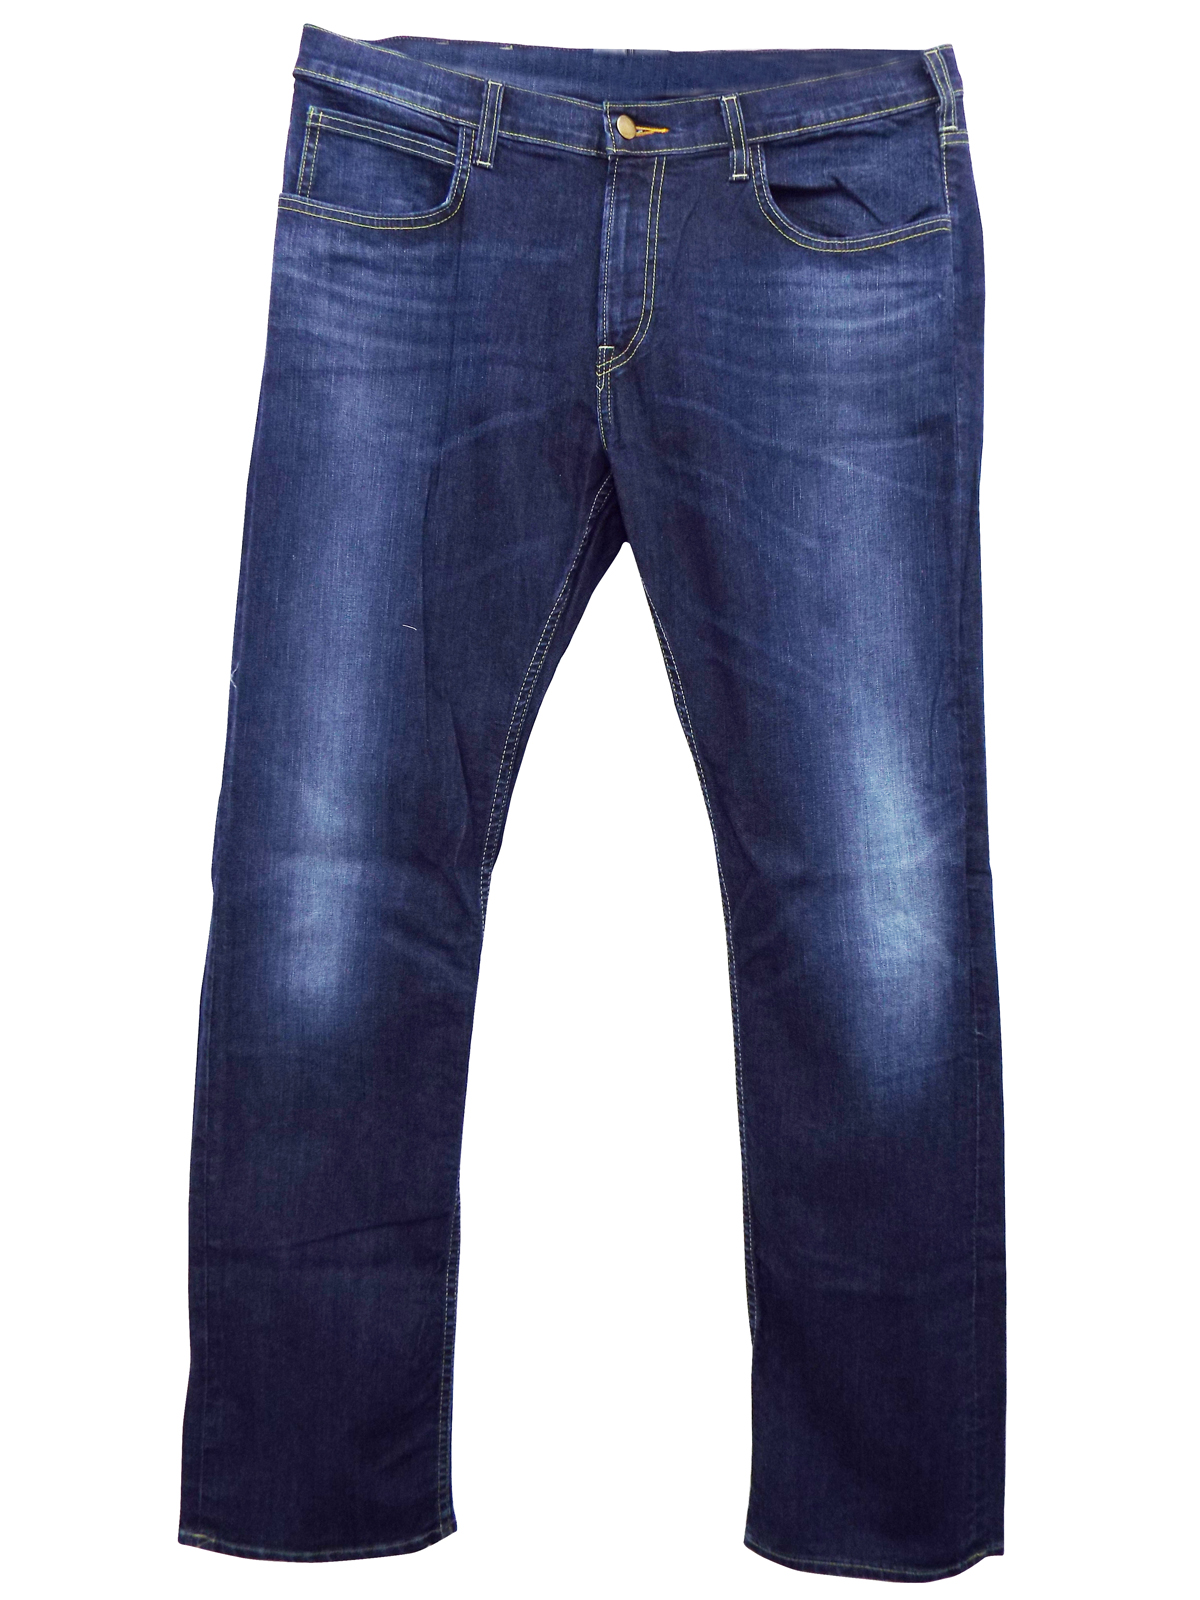 Lee Cooper - - LeeCooper INDIGO Straight Leg Denim Jeans - Waist Size ...